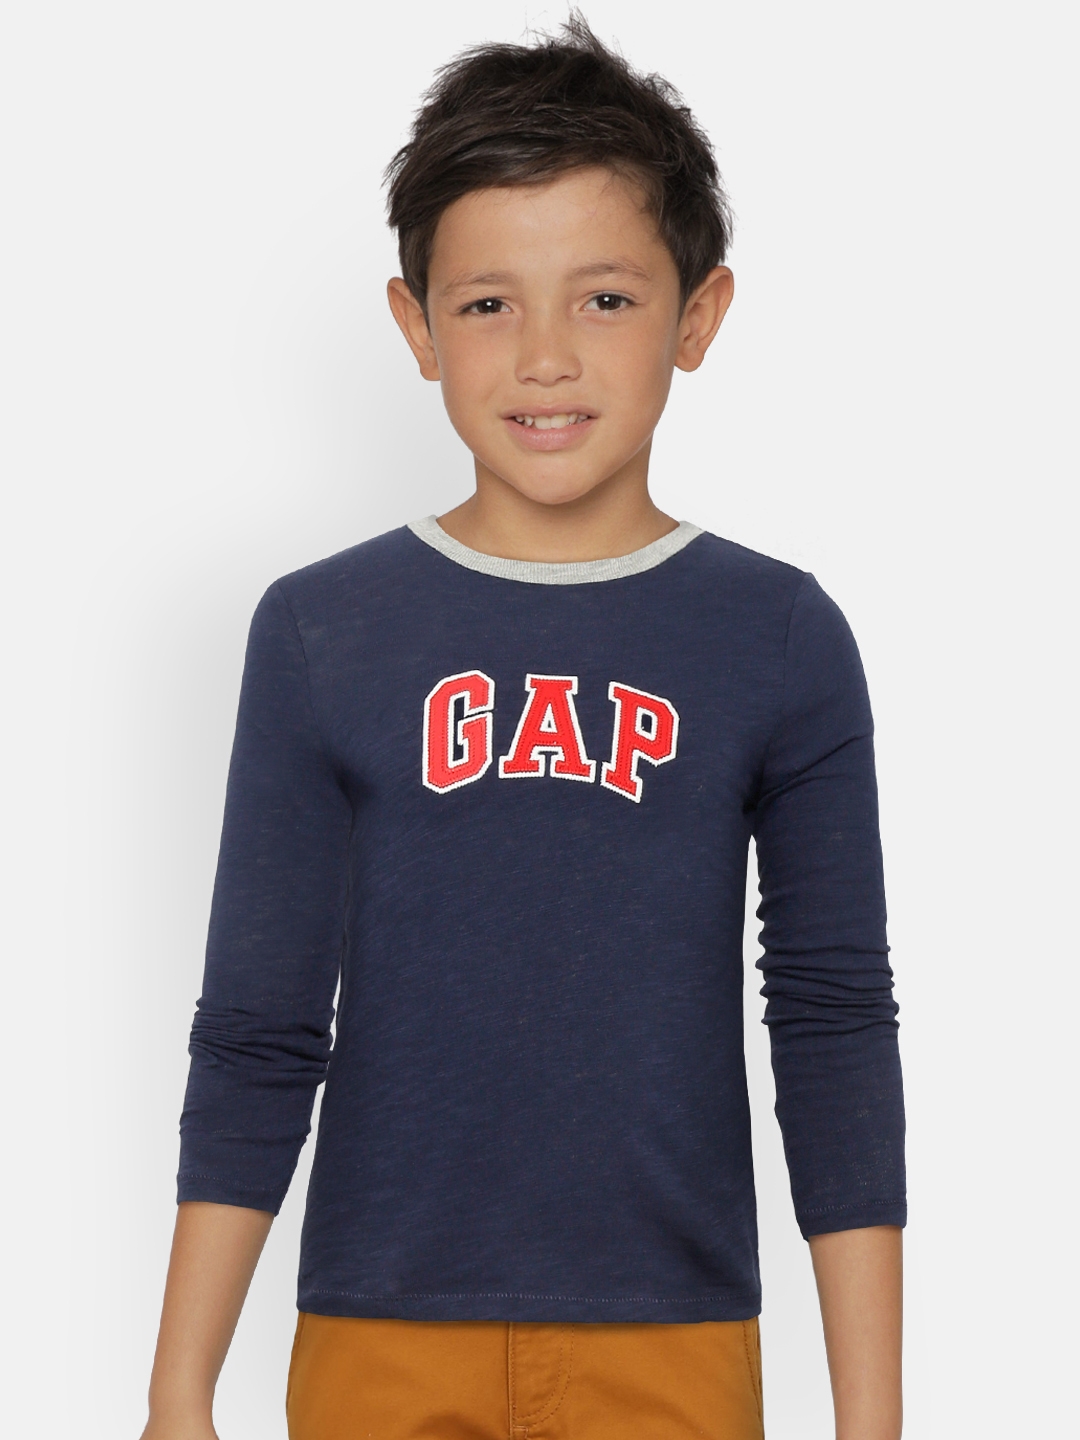 New Boys Baby Gap Logo Short Sleeve T Shirt Size 5t 